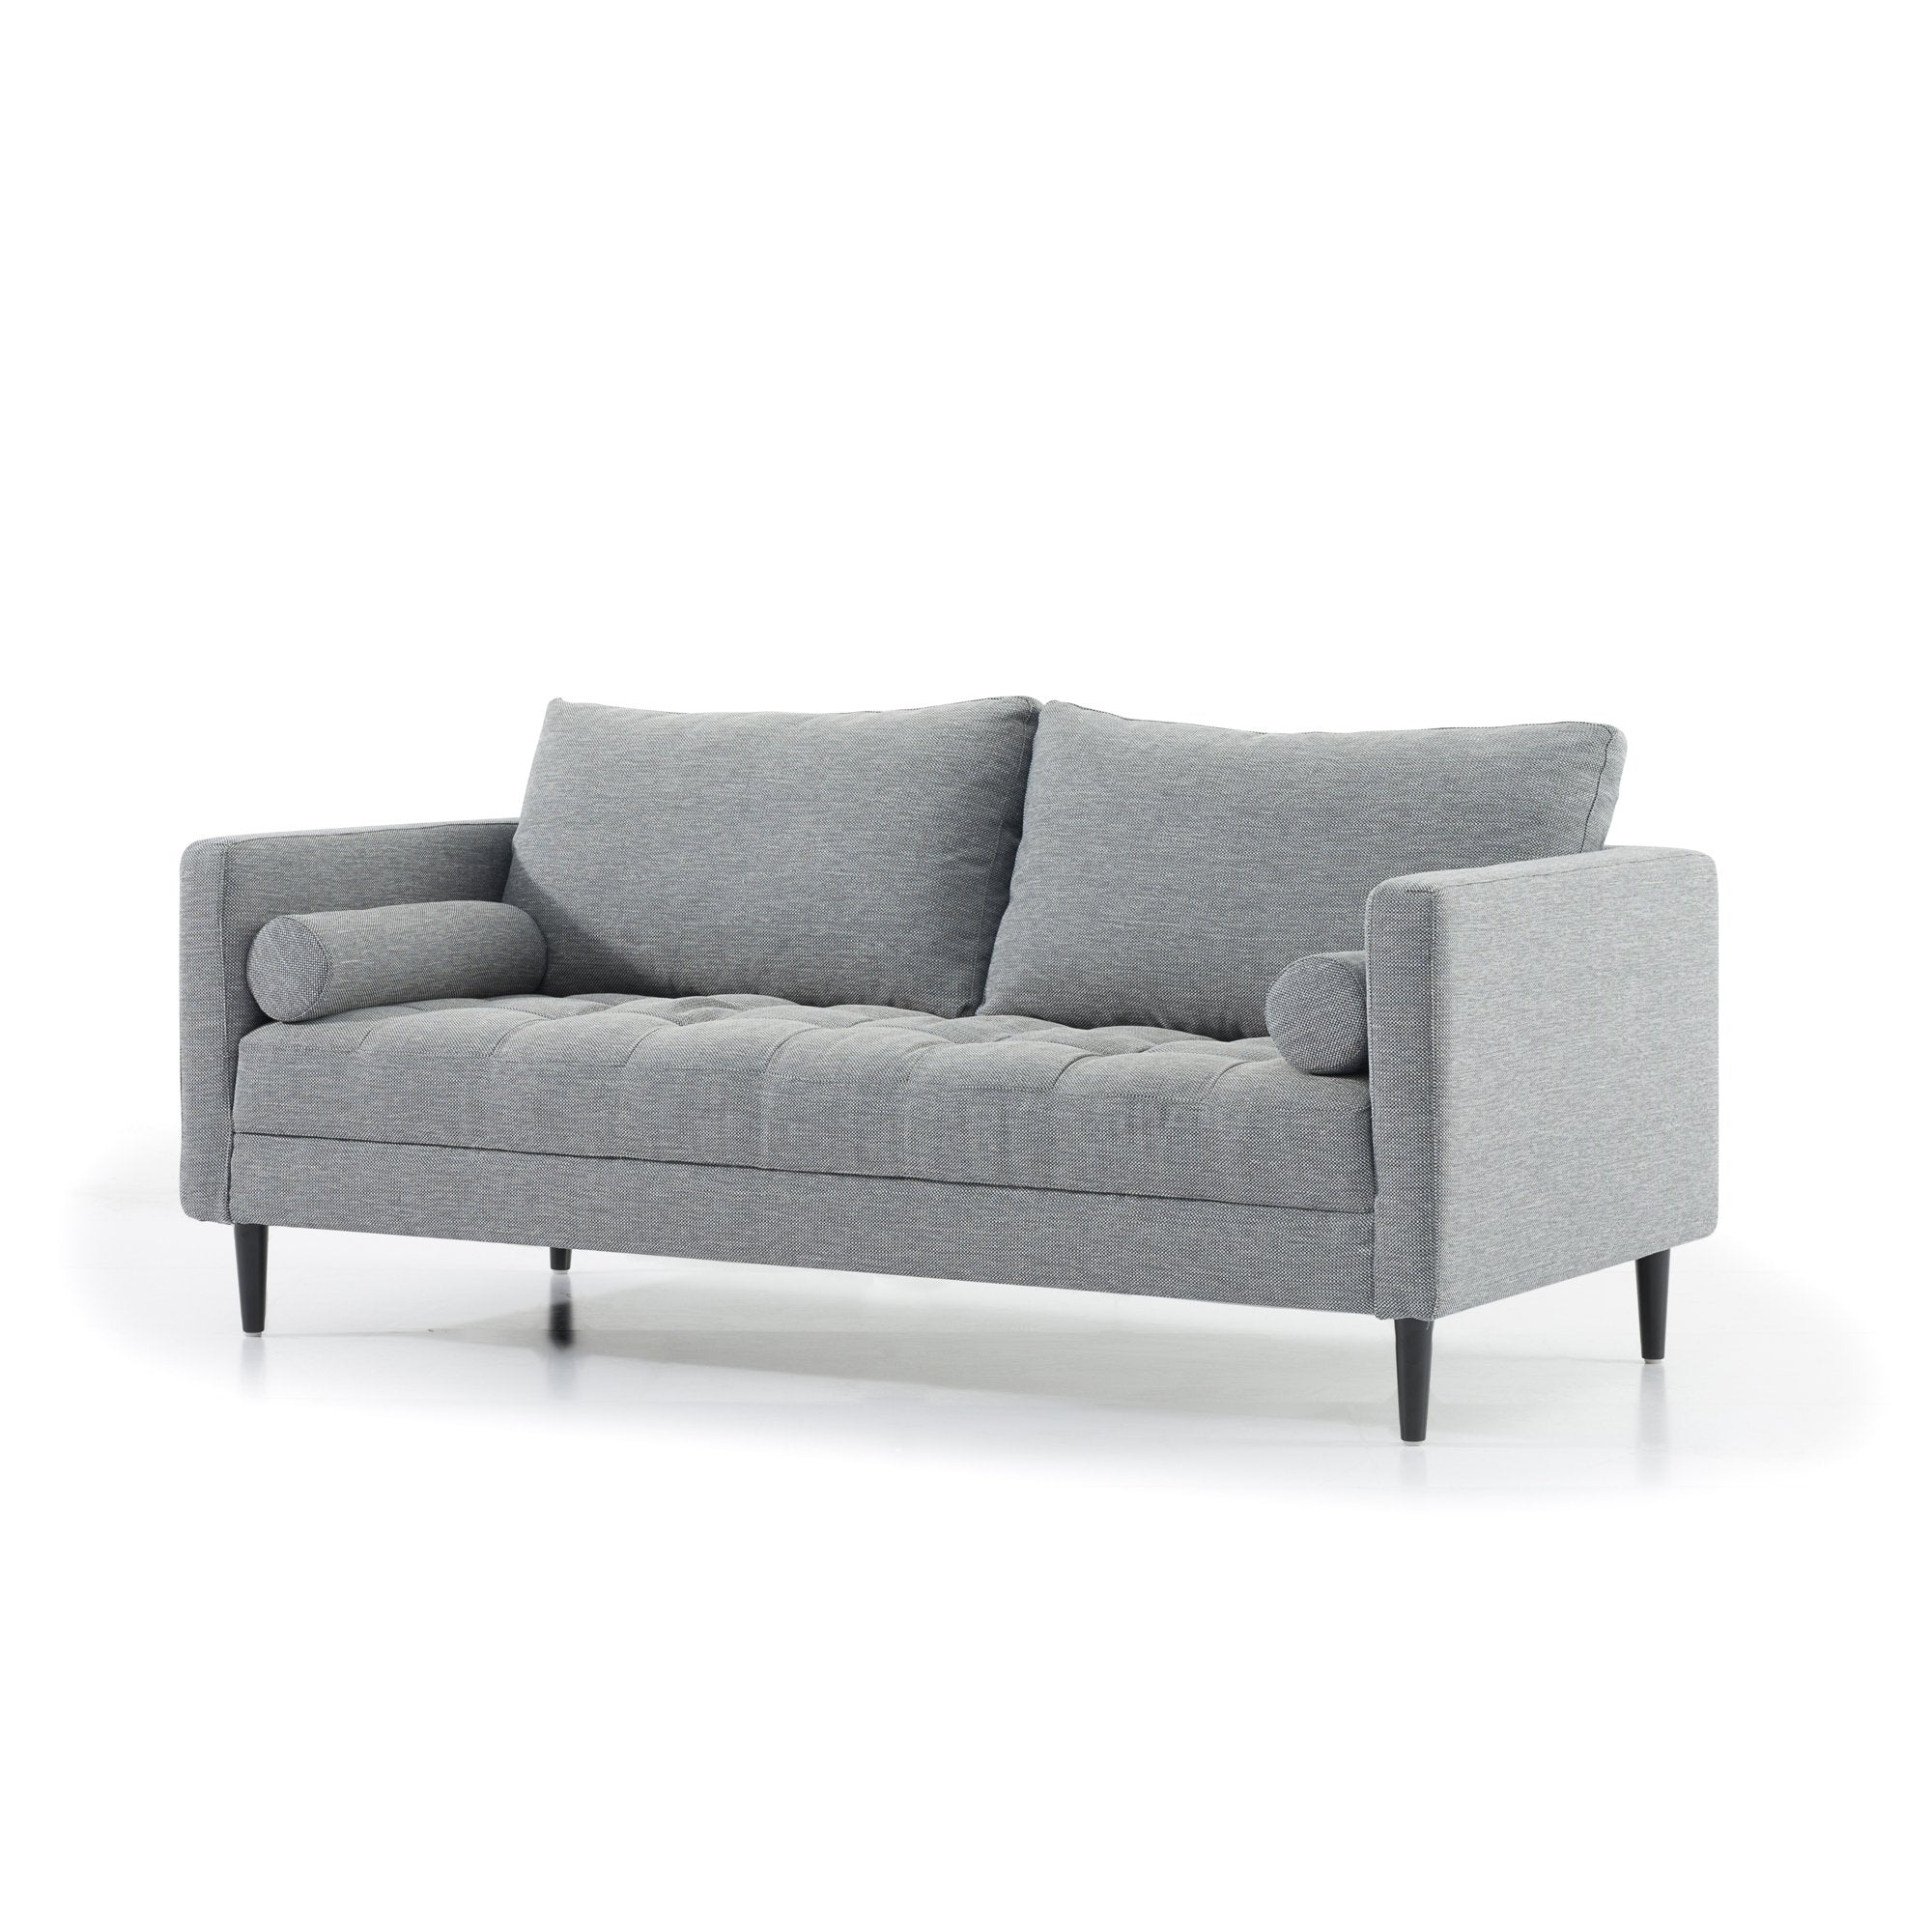 Ava 3 Seater Fabric Sofa - Navy Grey with Black Legs